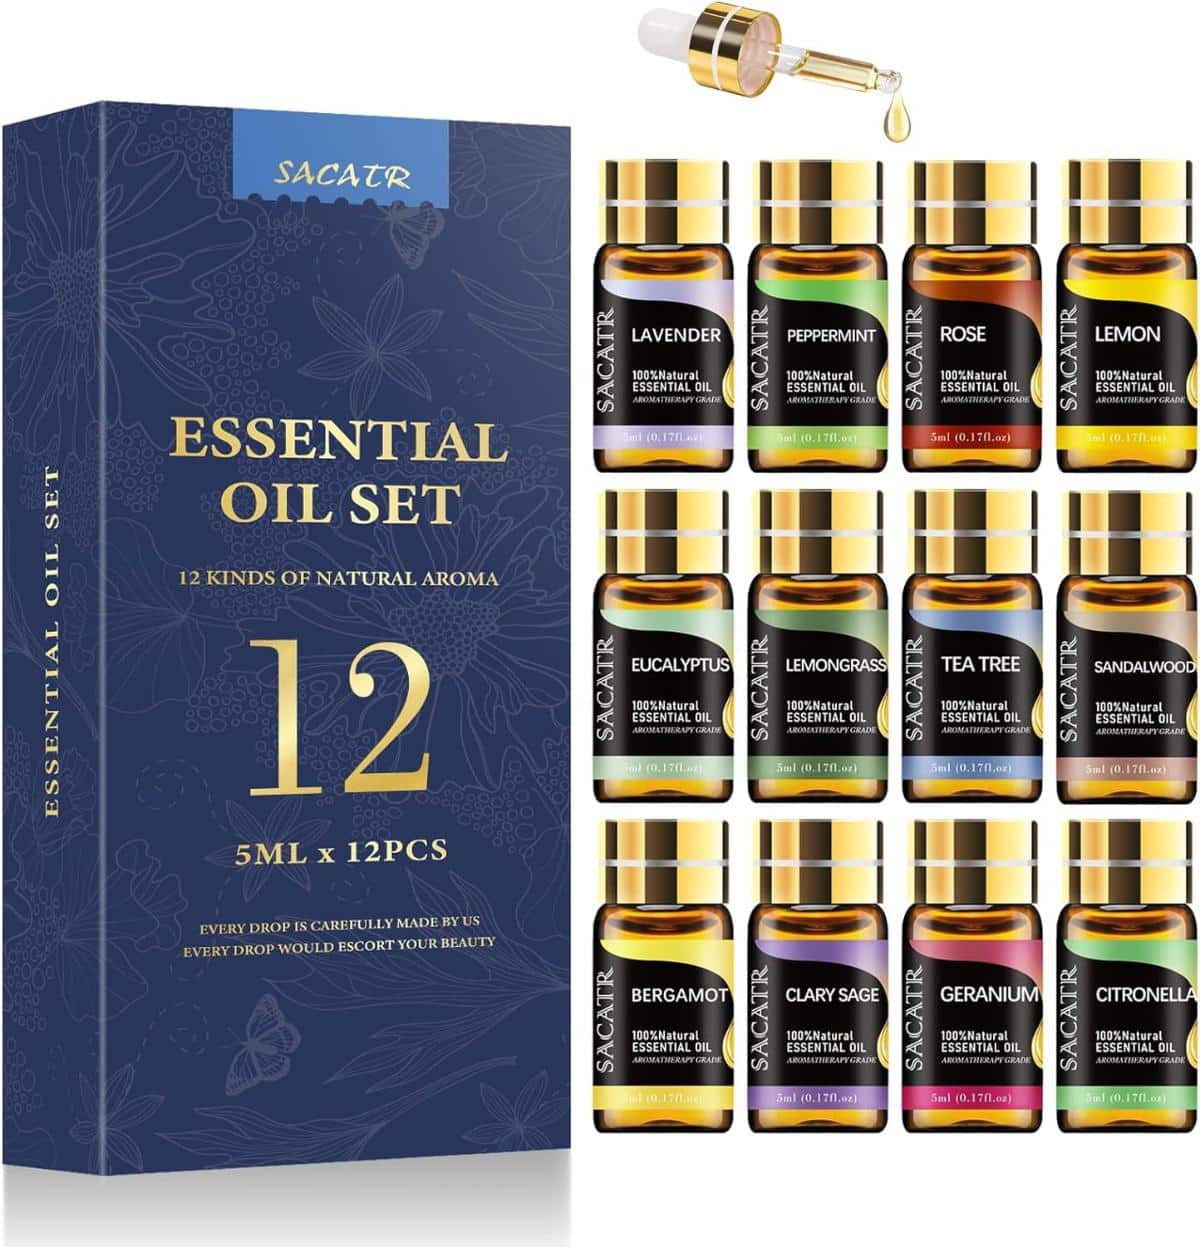 Essential Oils by SACATR: Natural Essential Oil Set